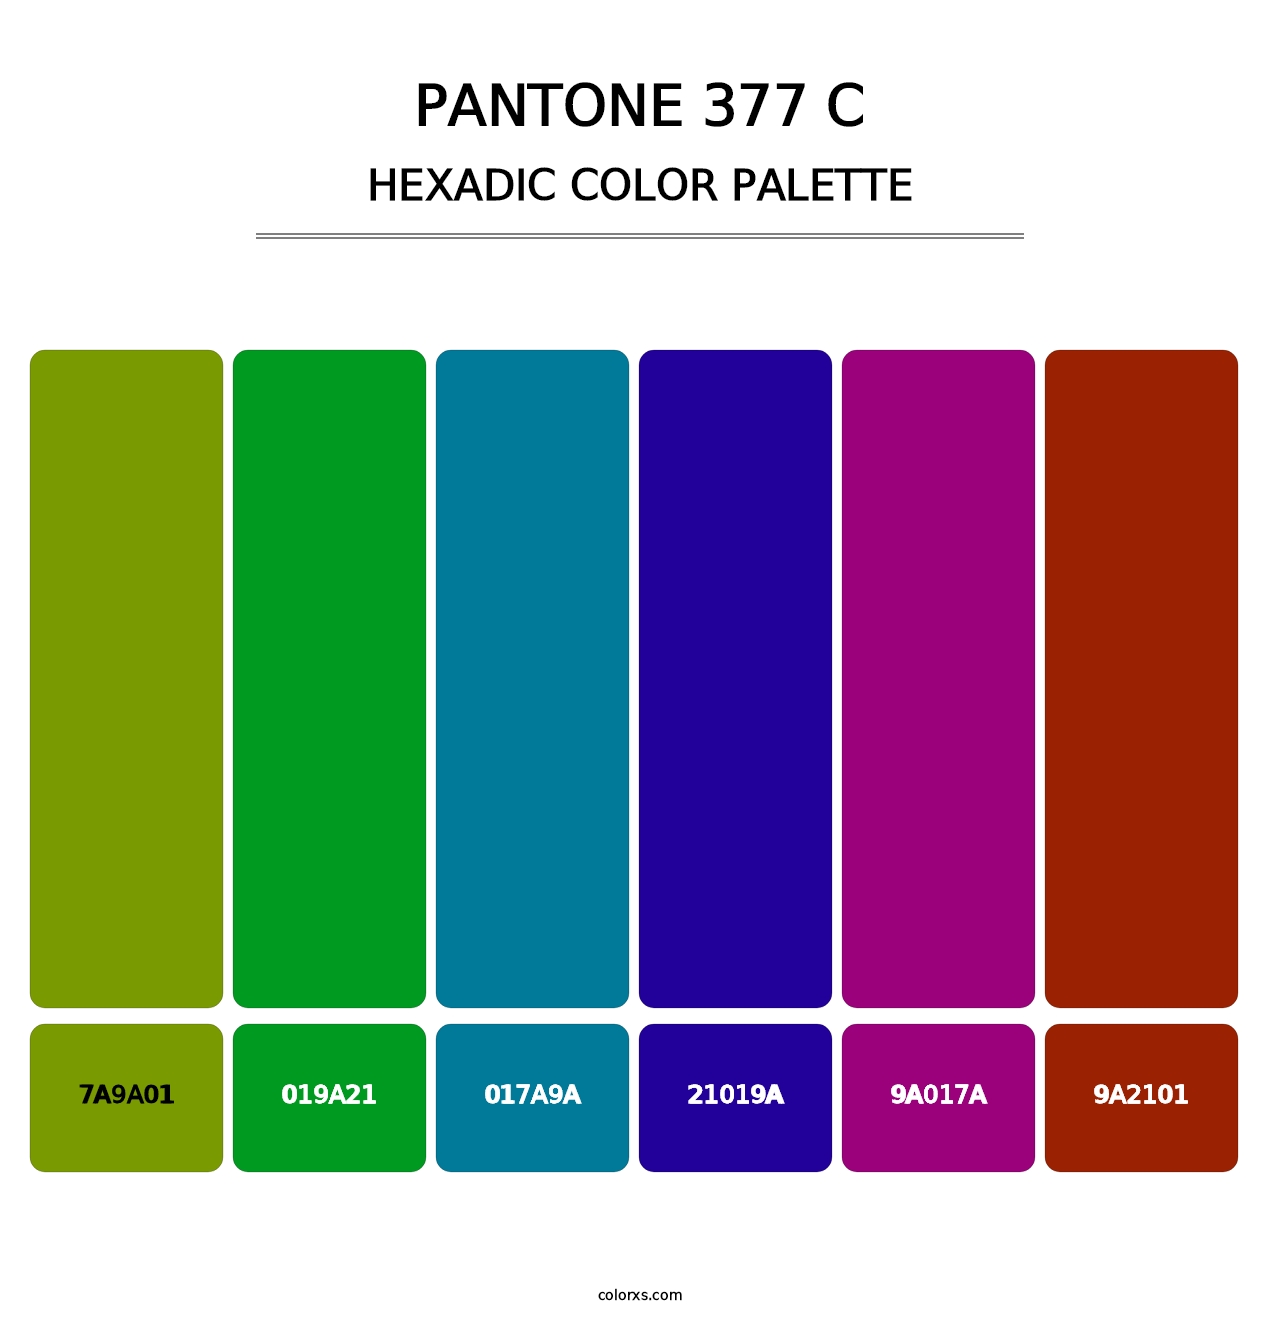 PANTONE 377 C - Hexadic Color Palette